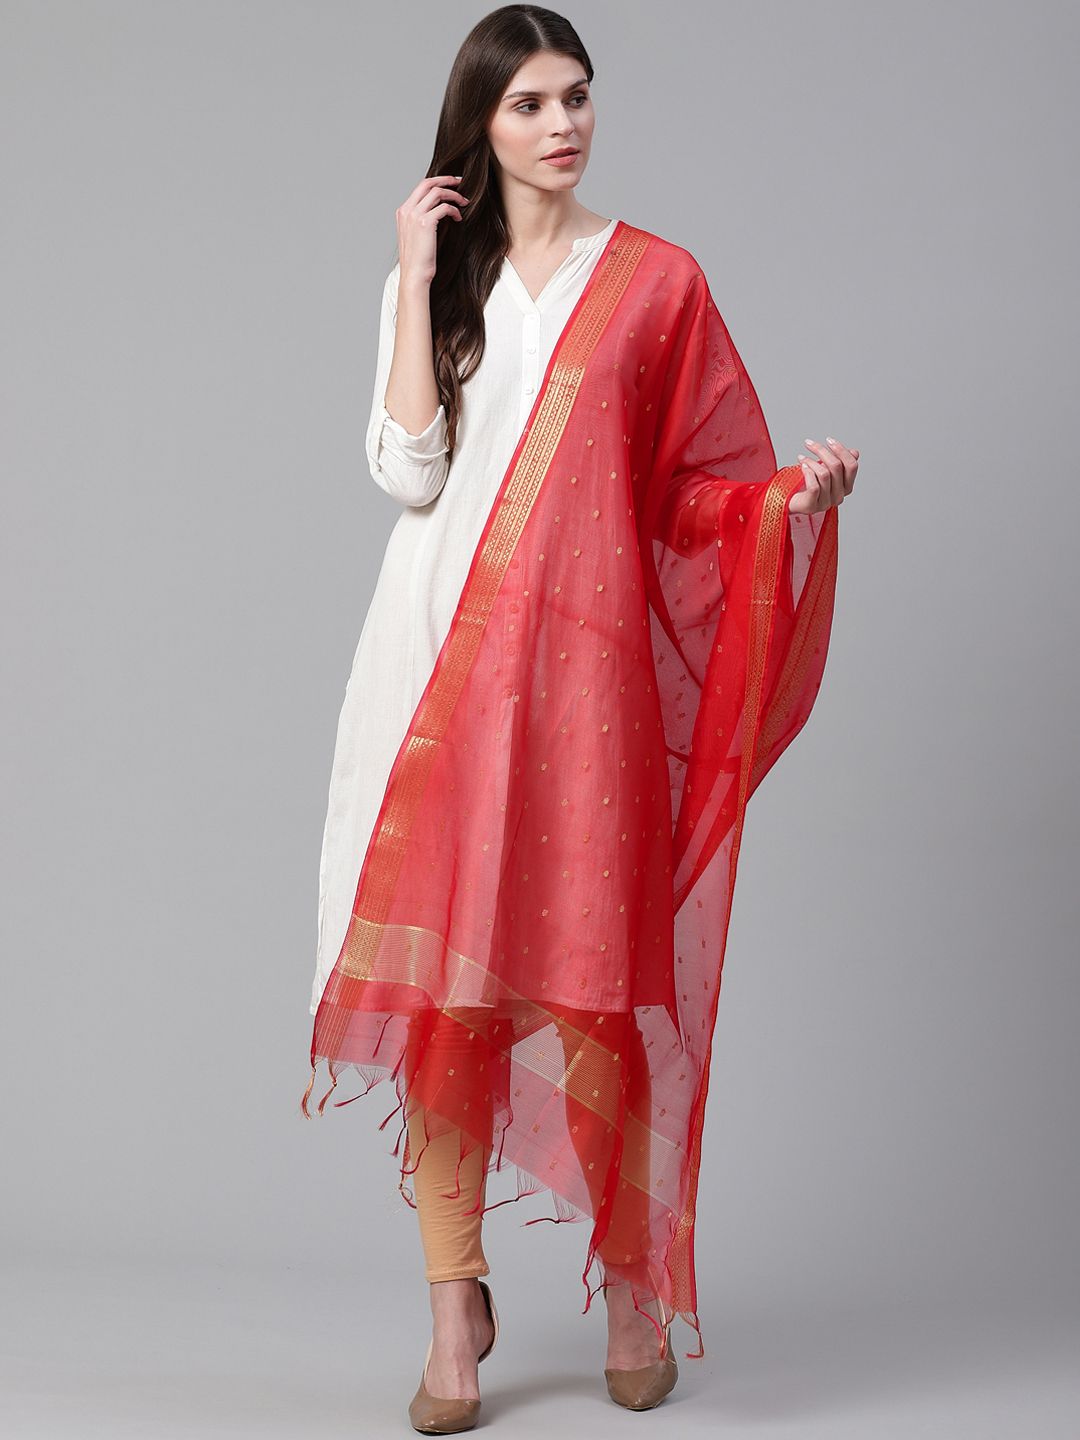 WEAVERS VILLA Red & Golden Woven Design Dupatta Price in India